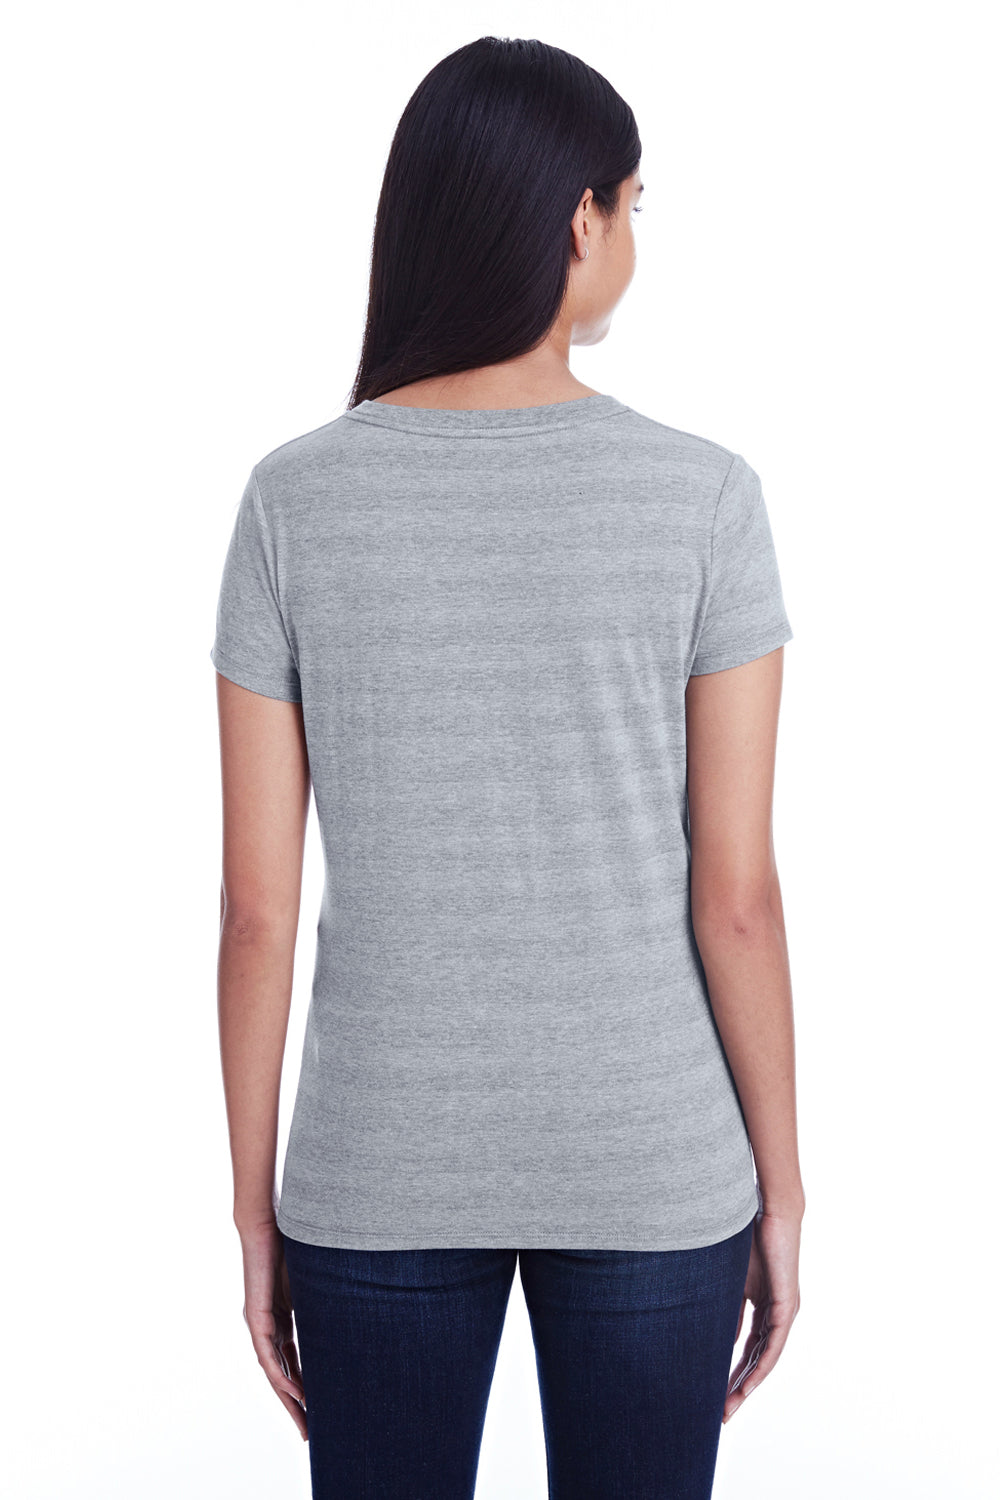 Threadfast Apparel 252RV Womens Short Sleeve V-Neck T-Shirt Heather Grey Back